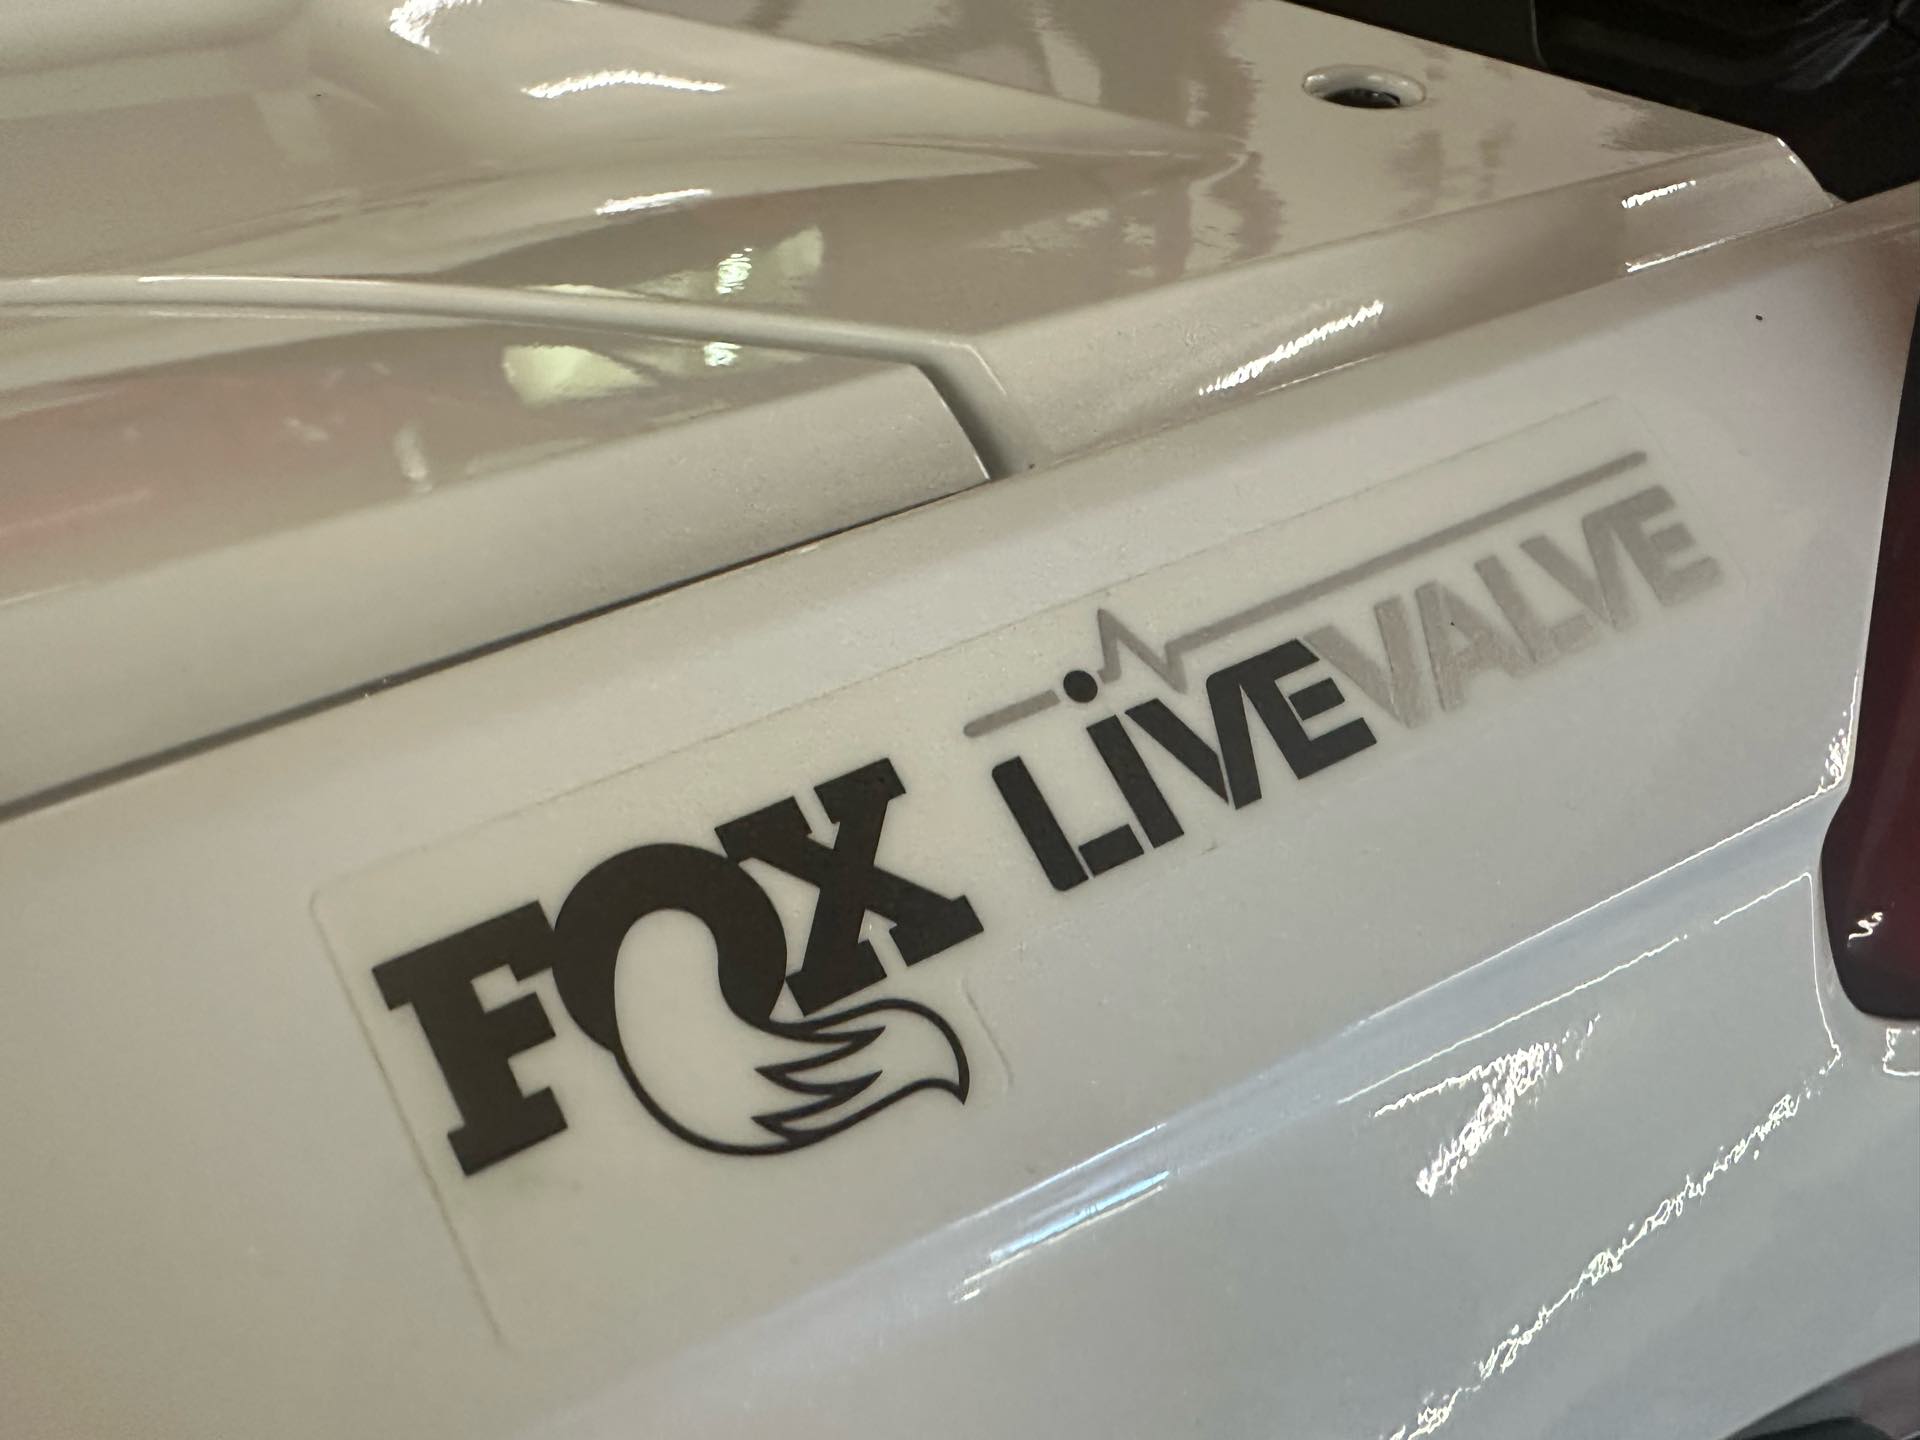 2023 Honda Talon 1000R FOX Live Valve at Southern Illinois Motorsports